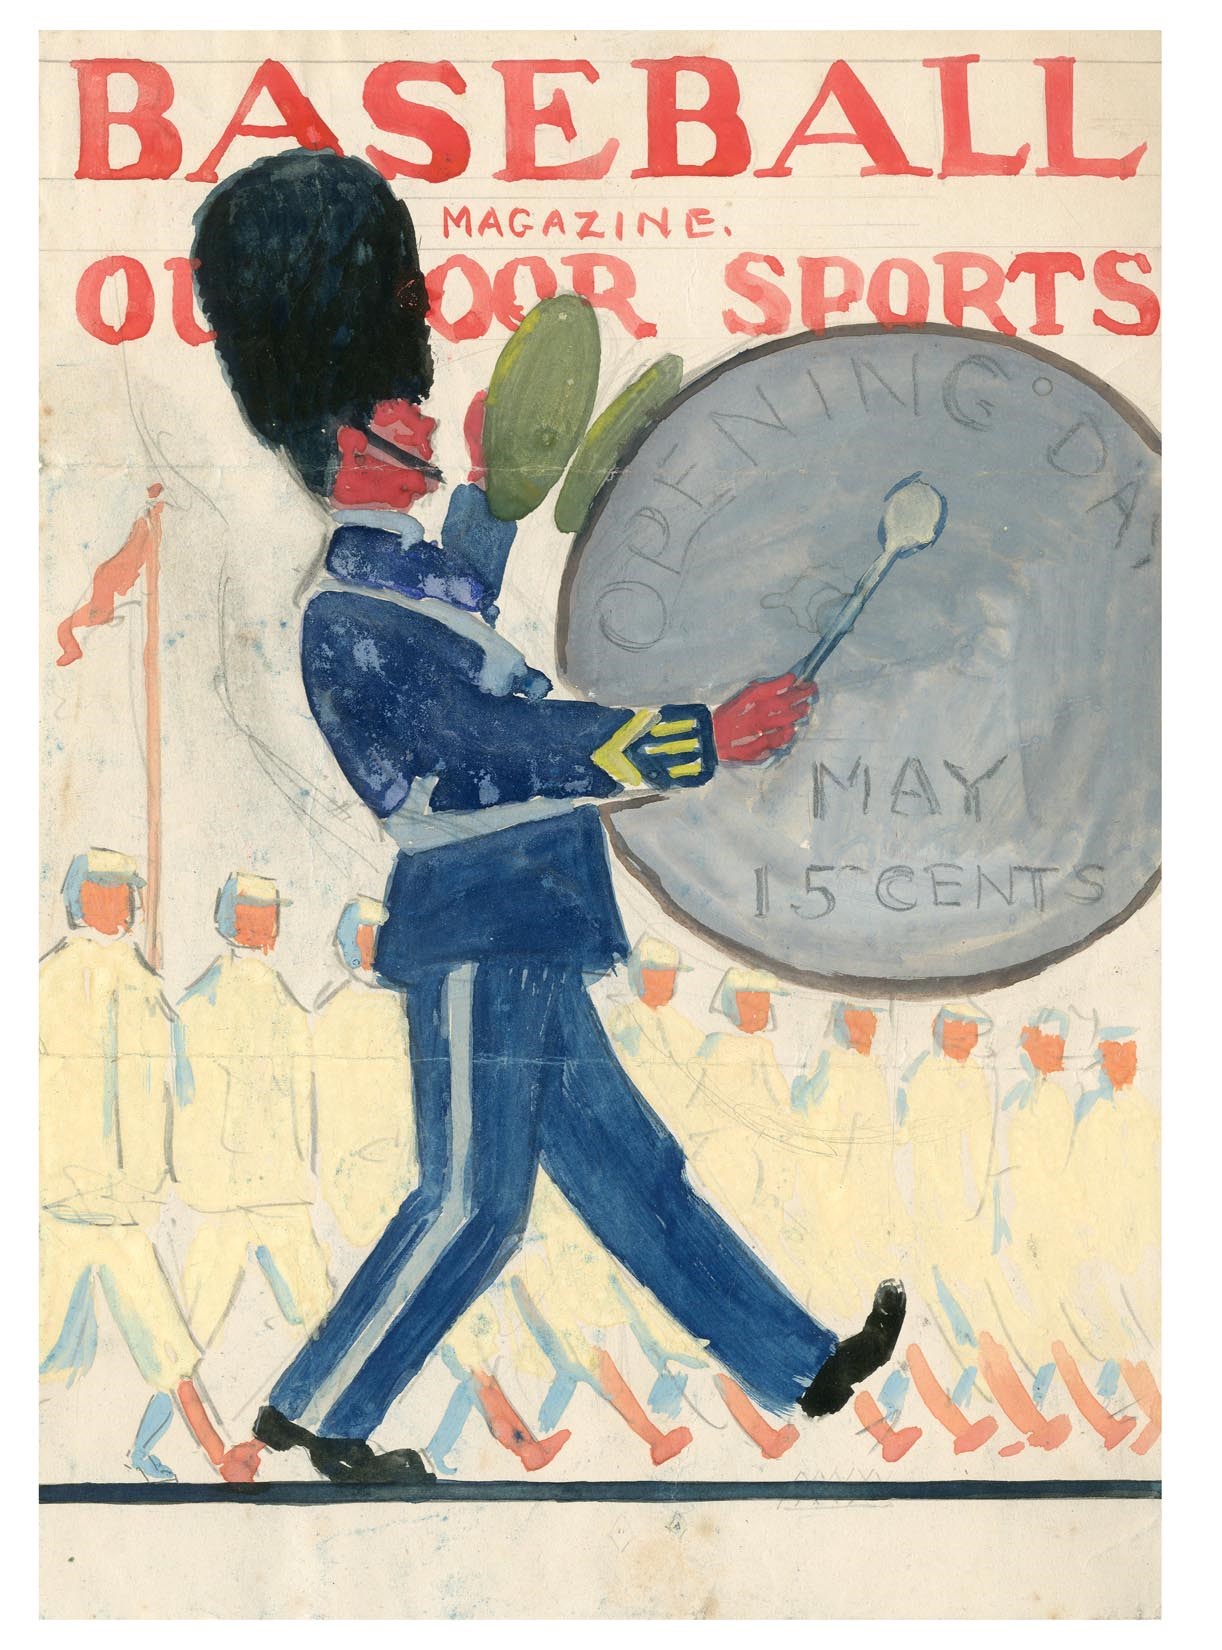 - 1912 "Opening Day" Baseball Magazine Cover Art Study by Gerrit Beneker (1882-1934)